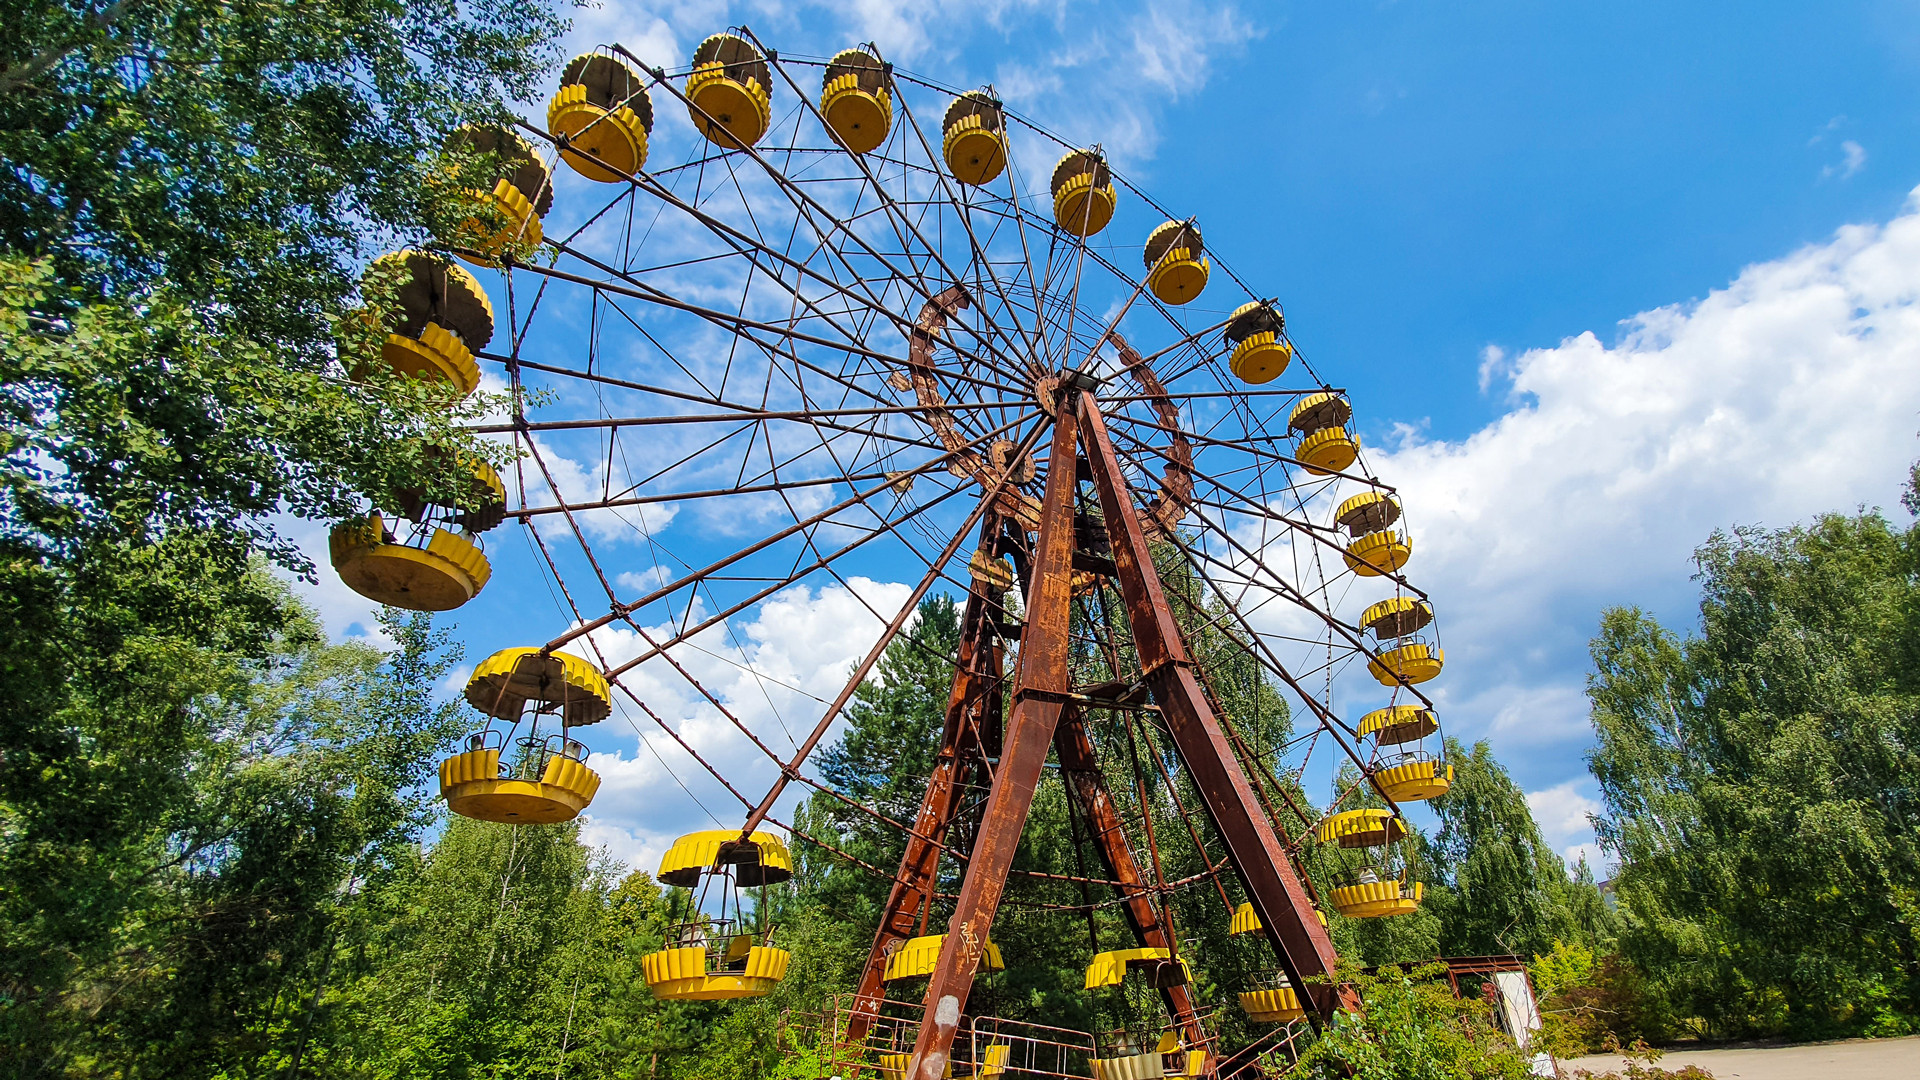 Abandoned amusement park in Pripyat, Ukraine